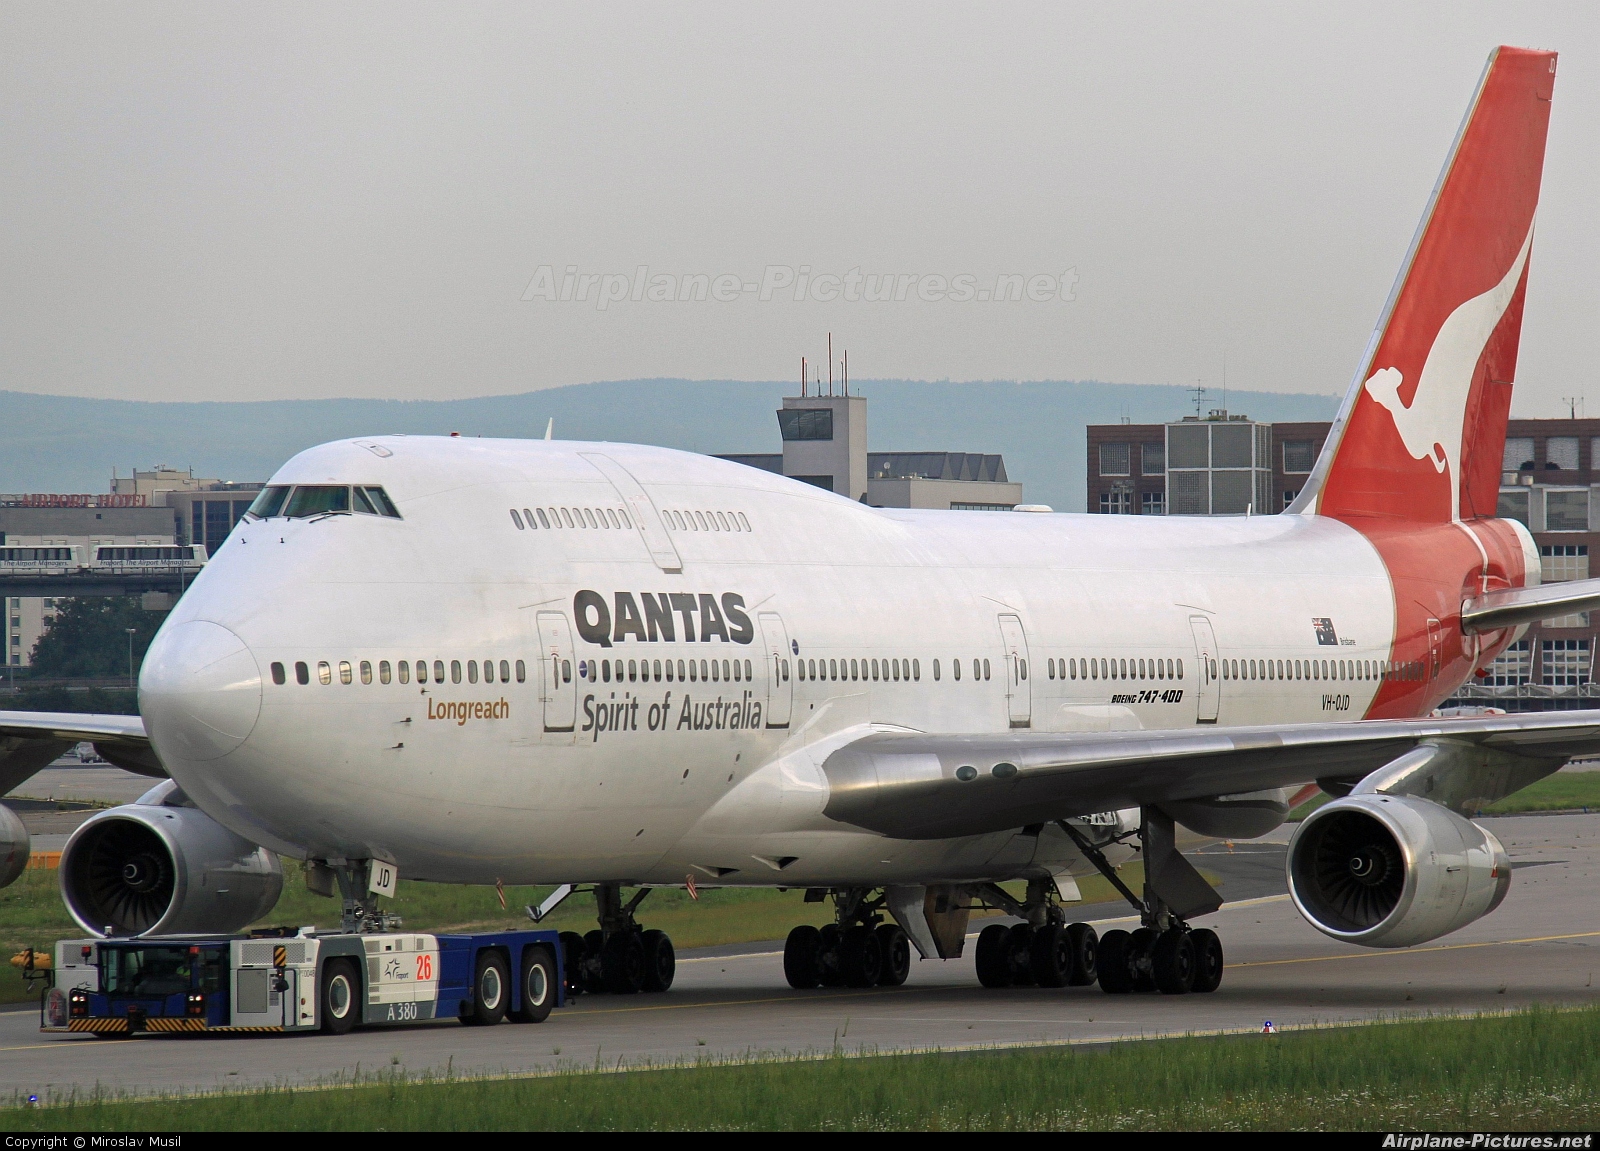 QANTAS VH-OJD aircraft at Frankfurt